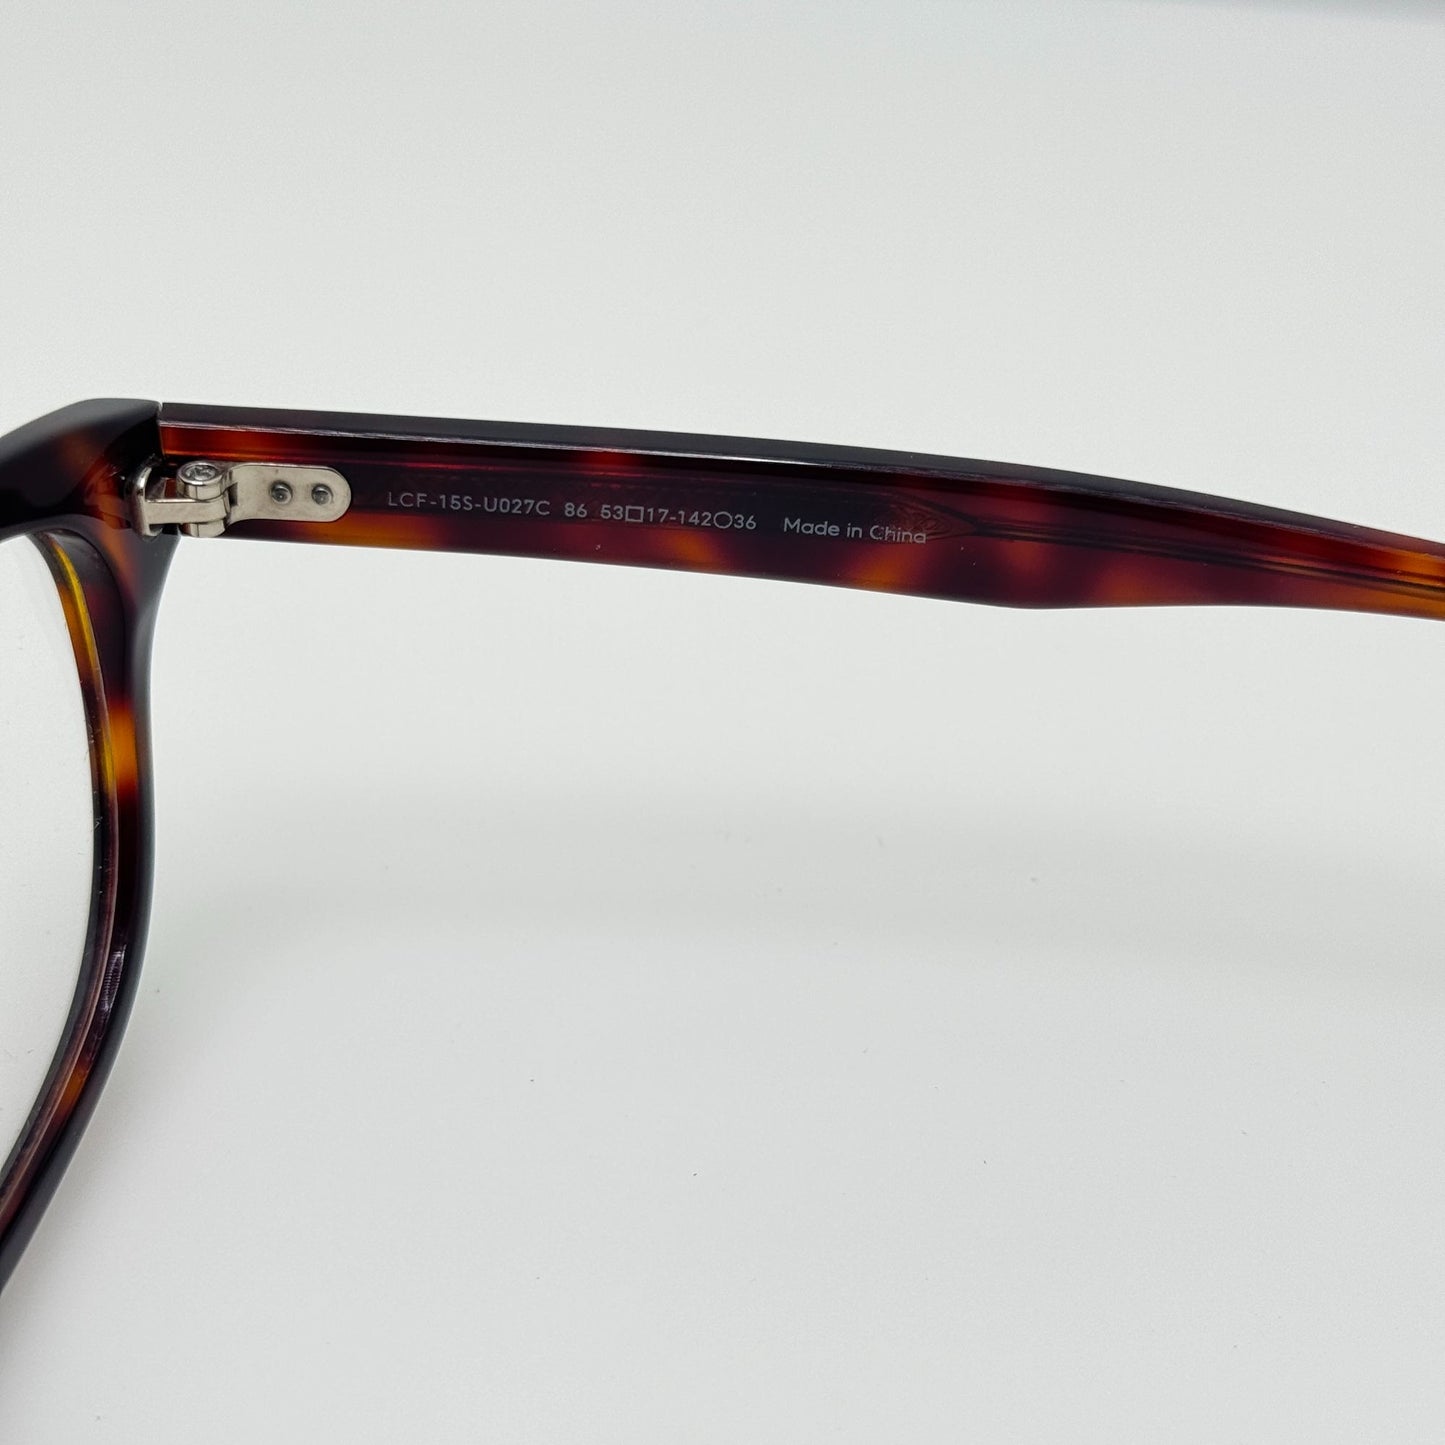 Jins Eyeglasses Eye Glasses Frames LCF-15S-U027C 86 53-17-142 36